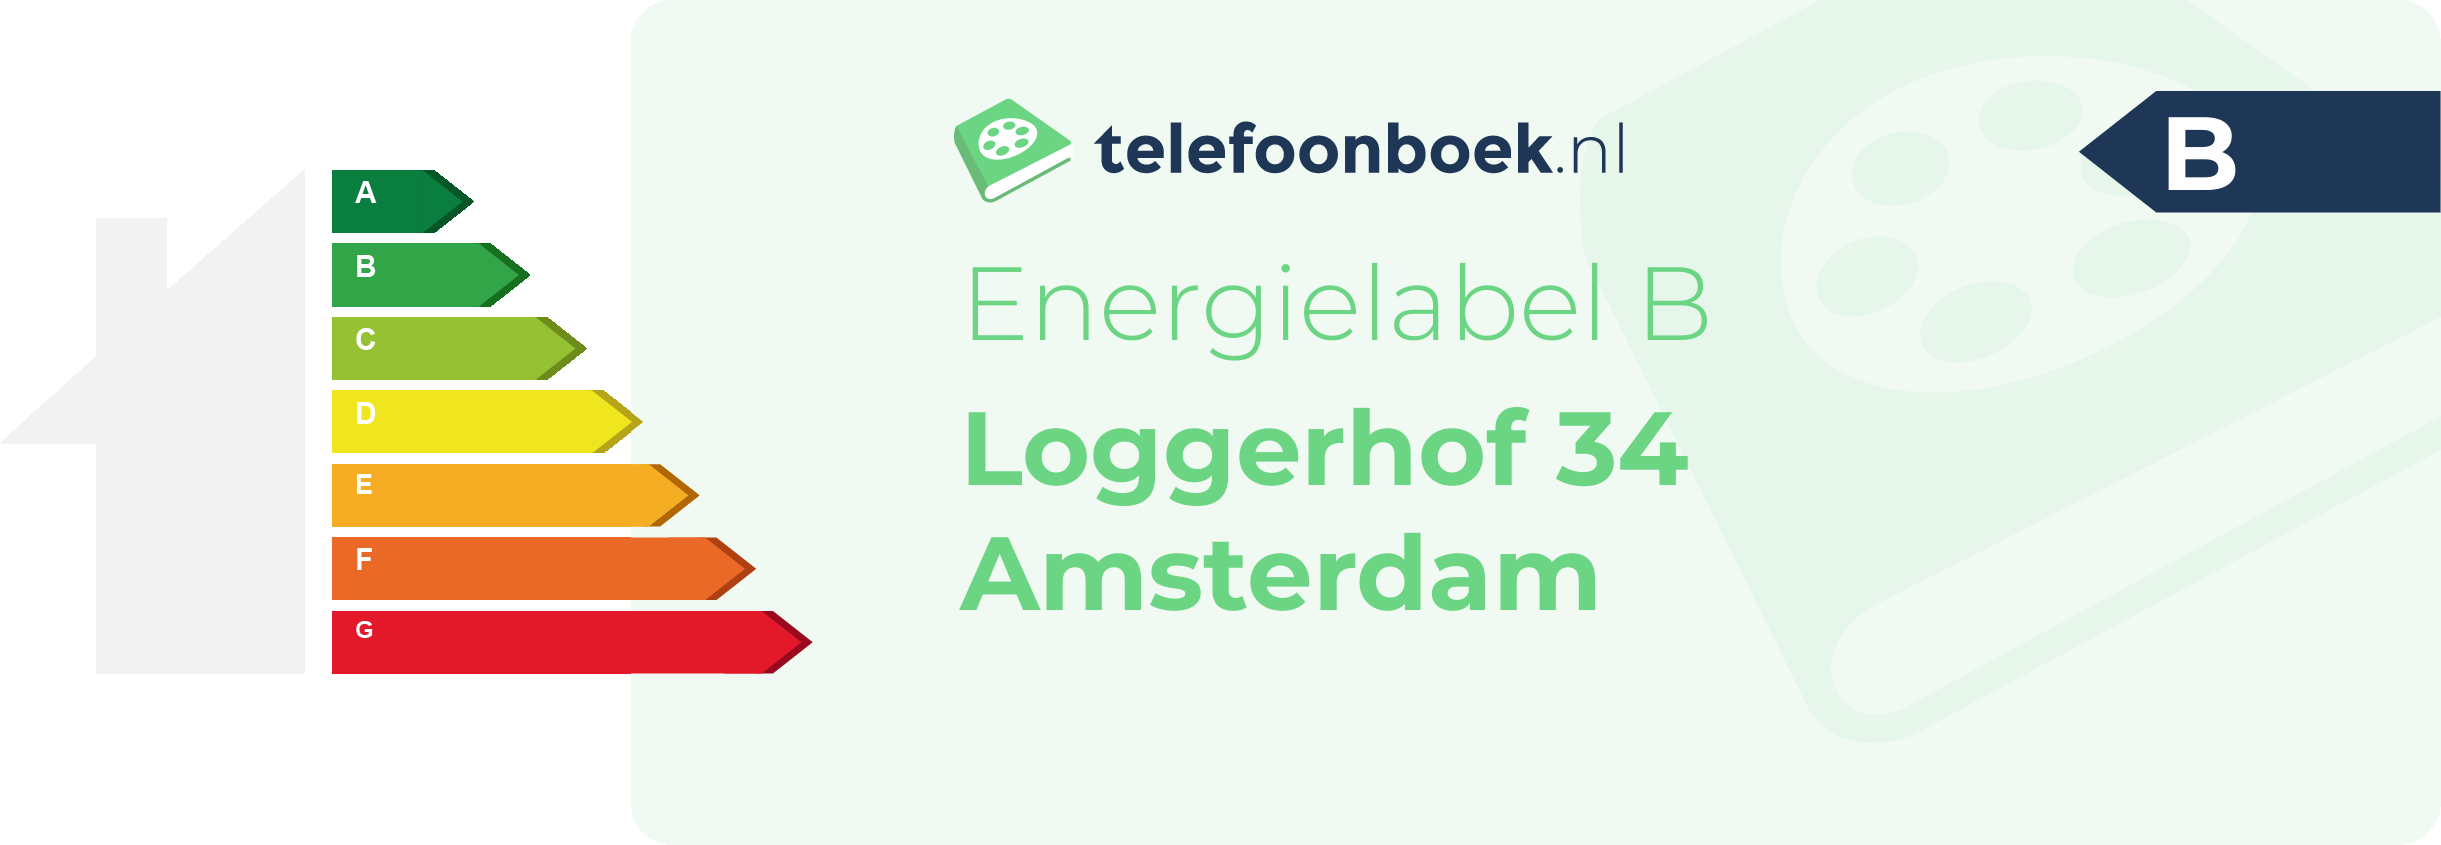 Energielabel Loggerhof 34 Amsterdam